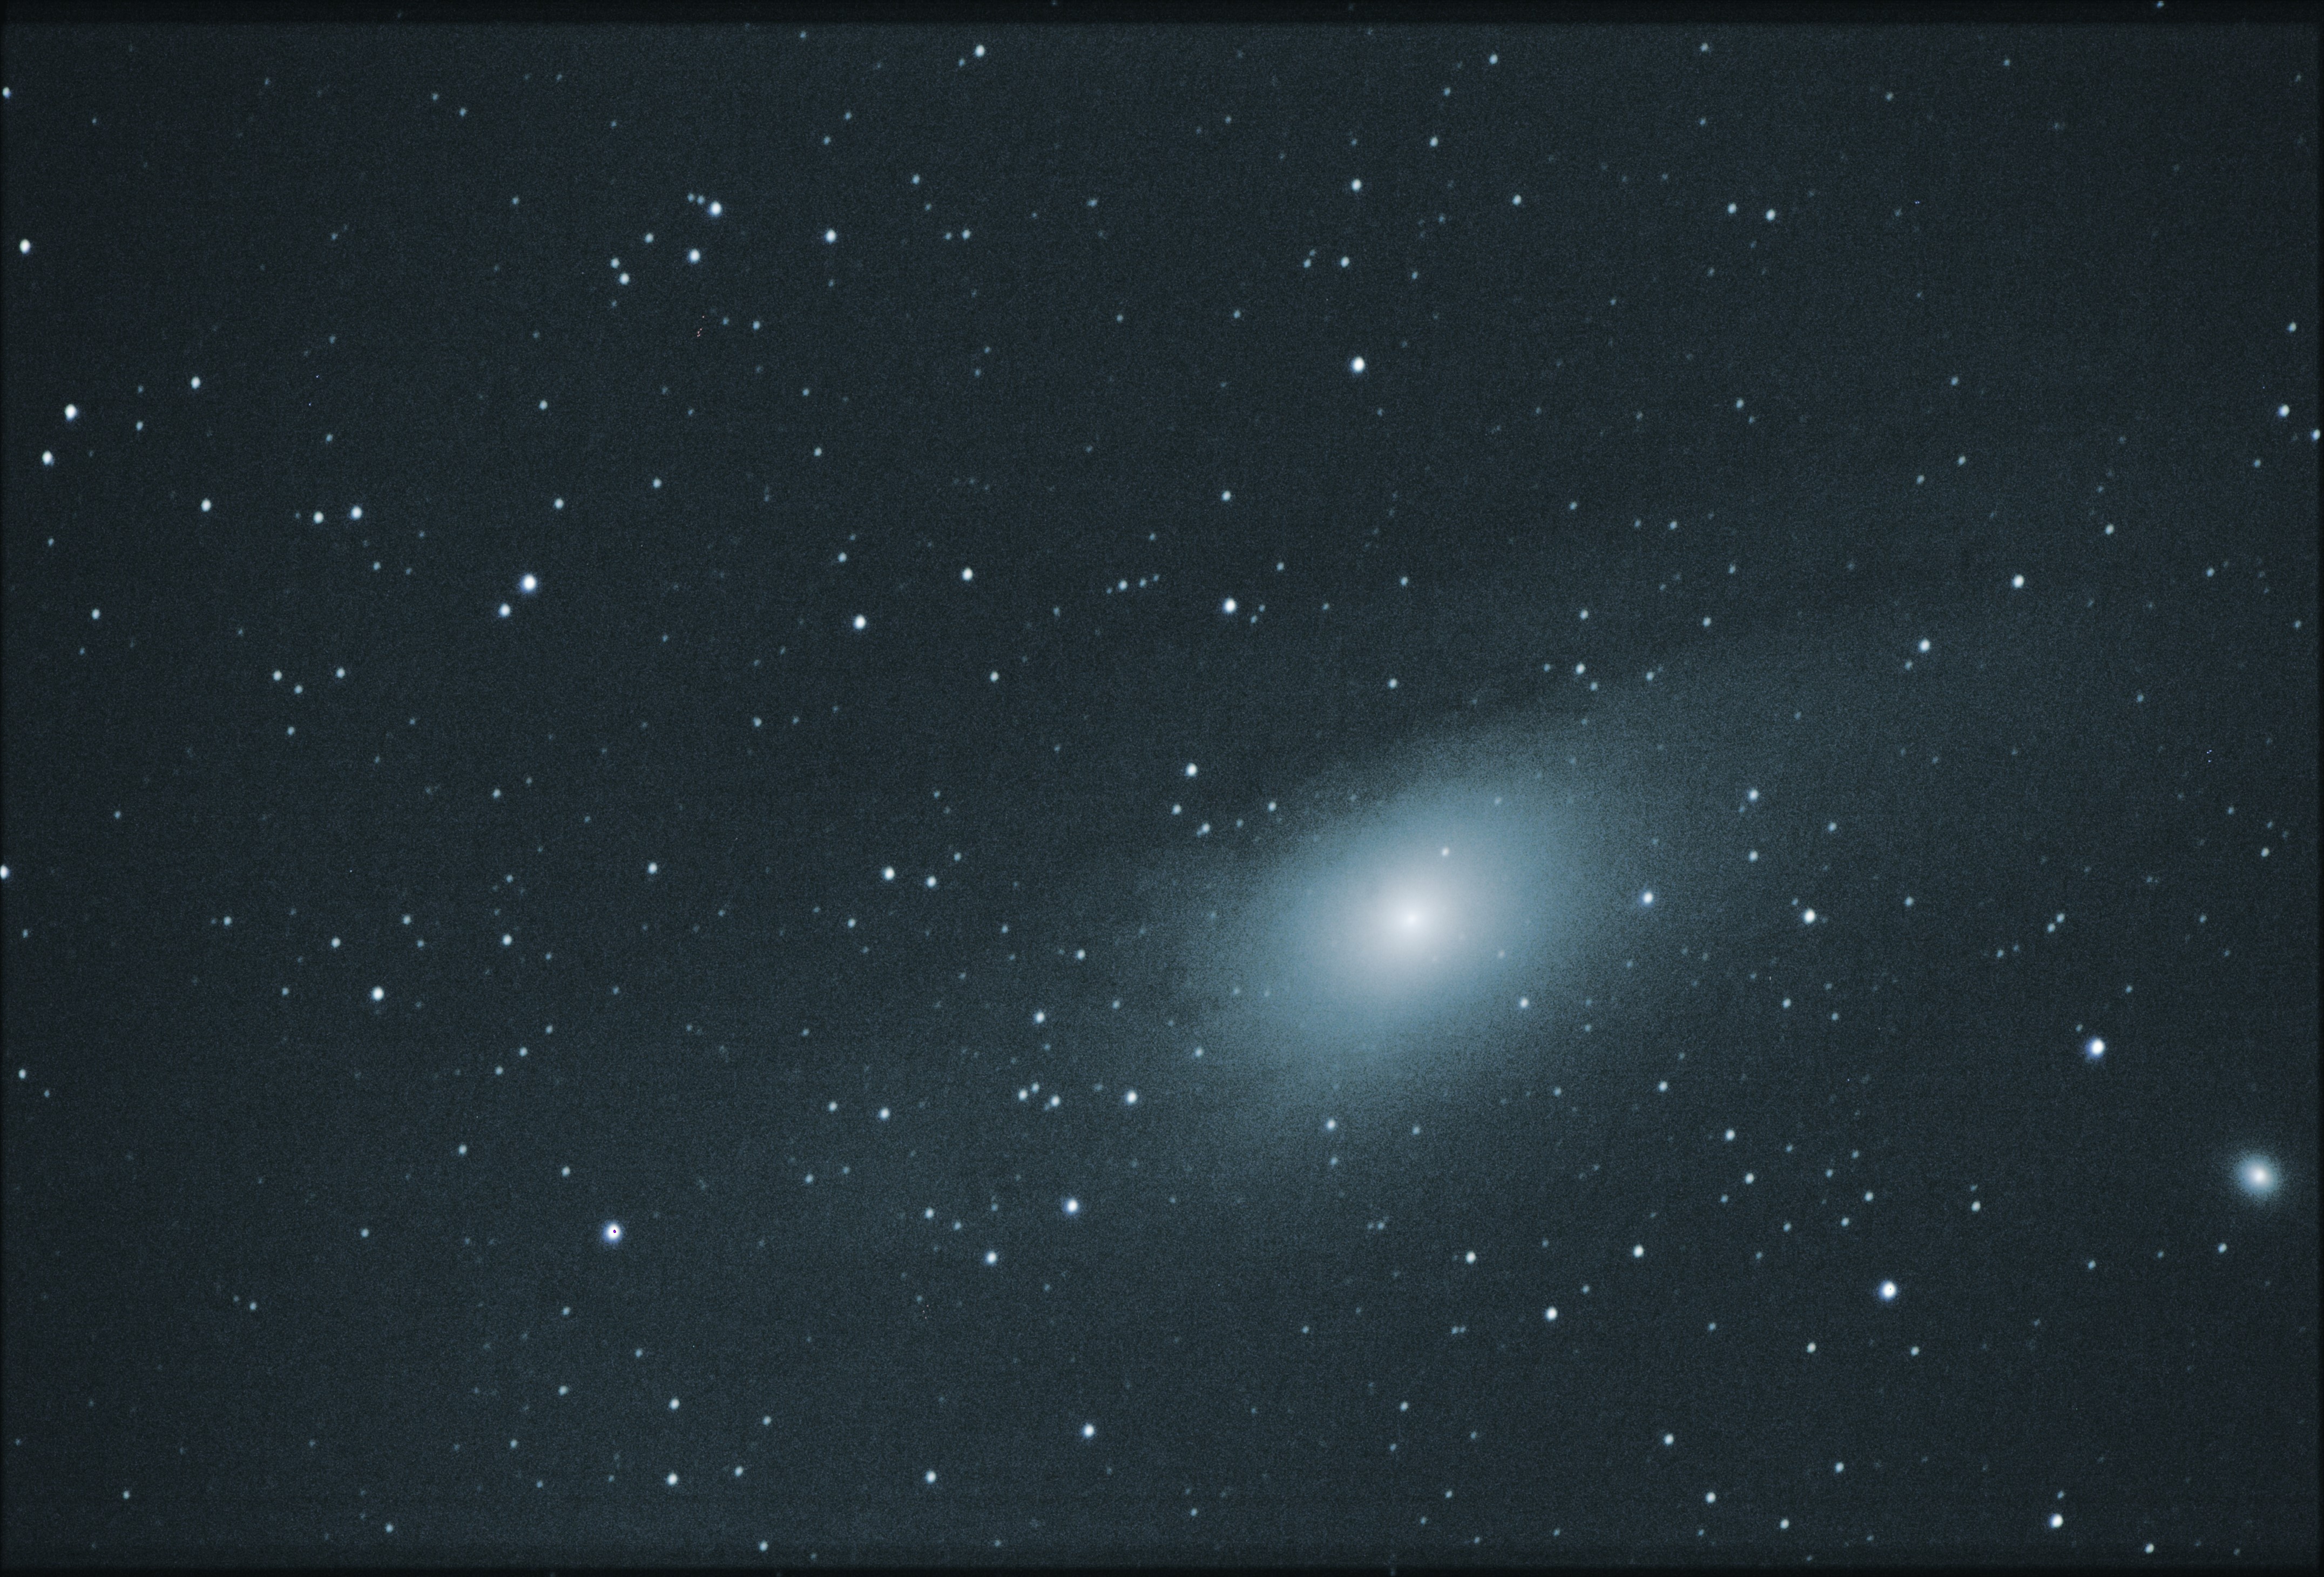 Andromeda2.jpg